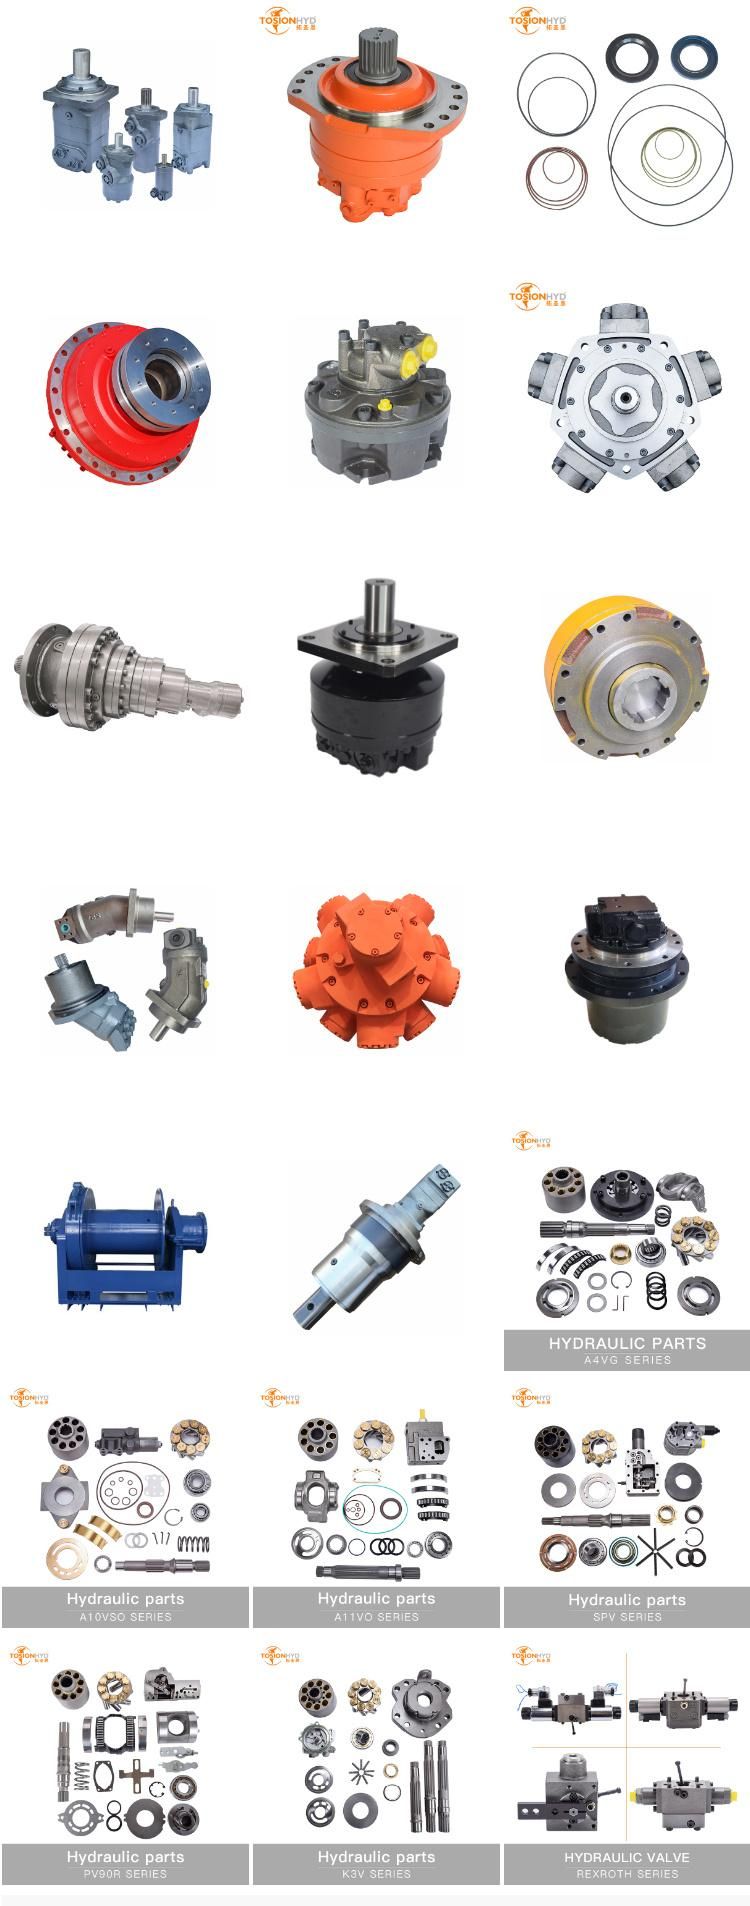 PC60-7 Hydraulic Pump Parts Spare Excavator Parts with Komatsu